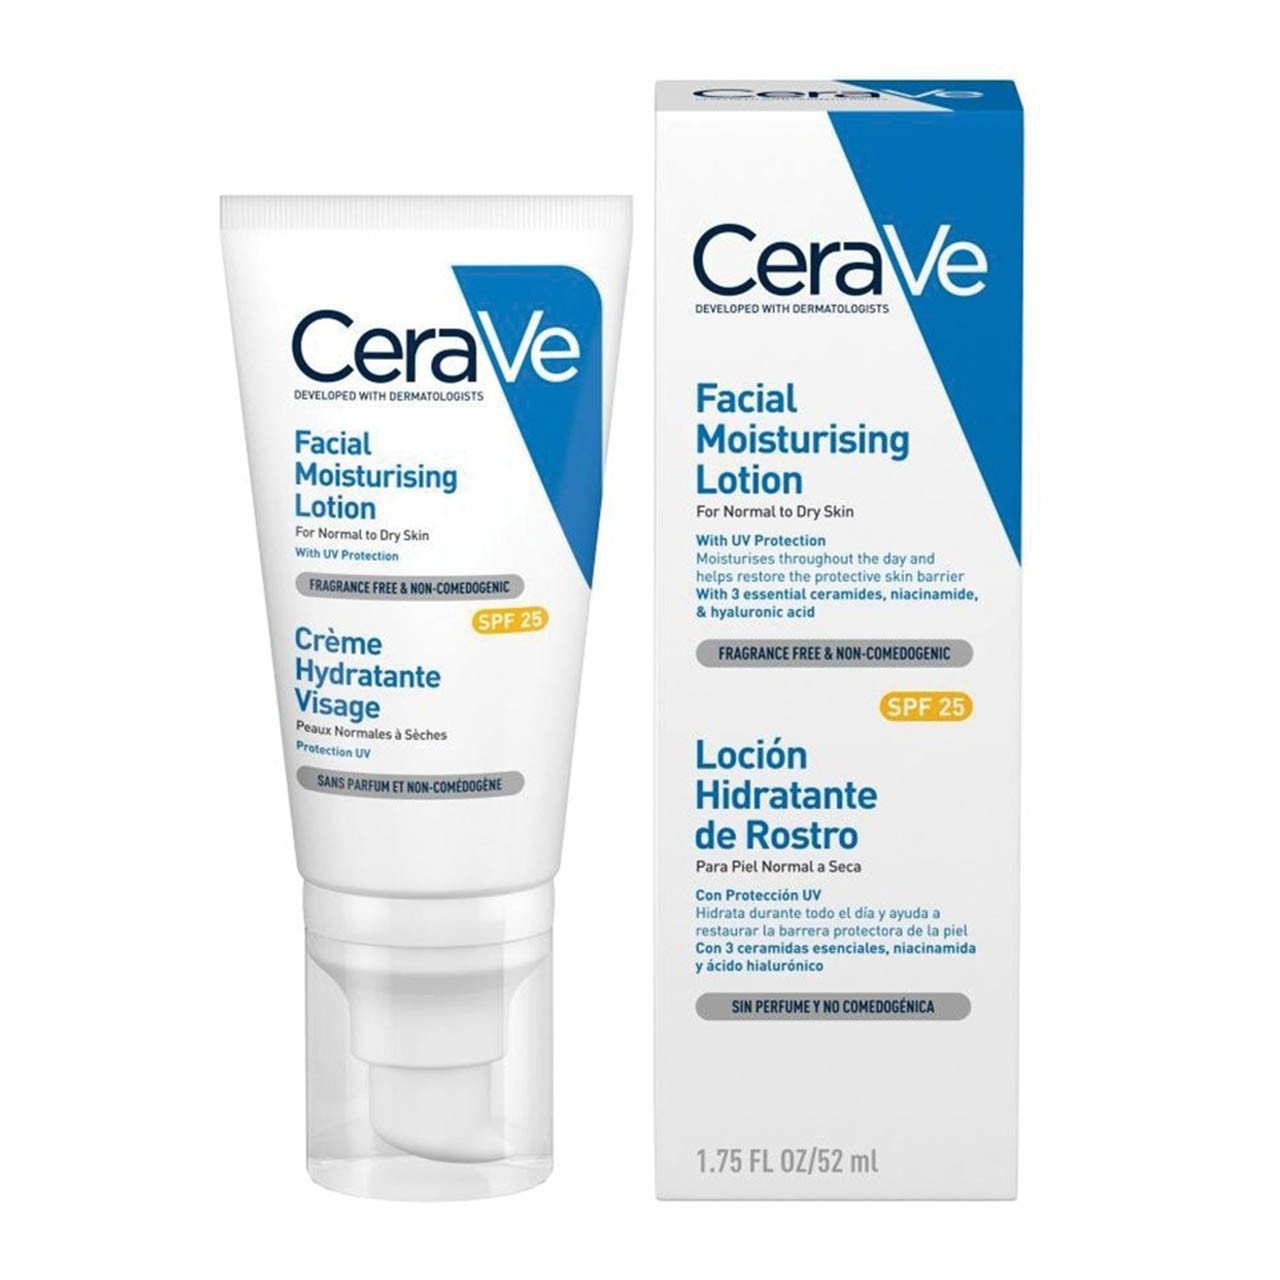 u-cerave-facial-moisturising-lotion-enydatikh-krema-proswpoy-me-spf-25.jpg